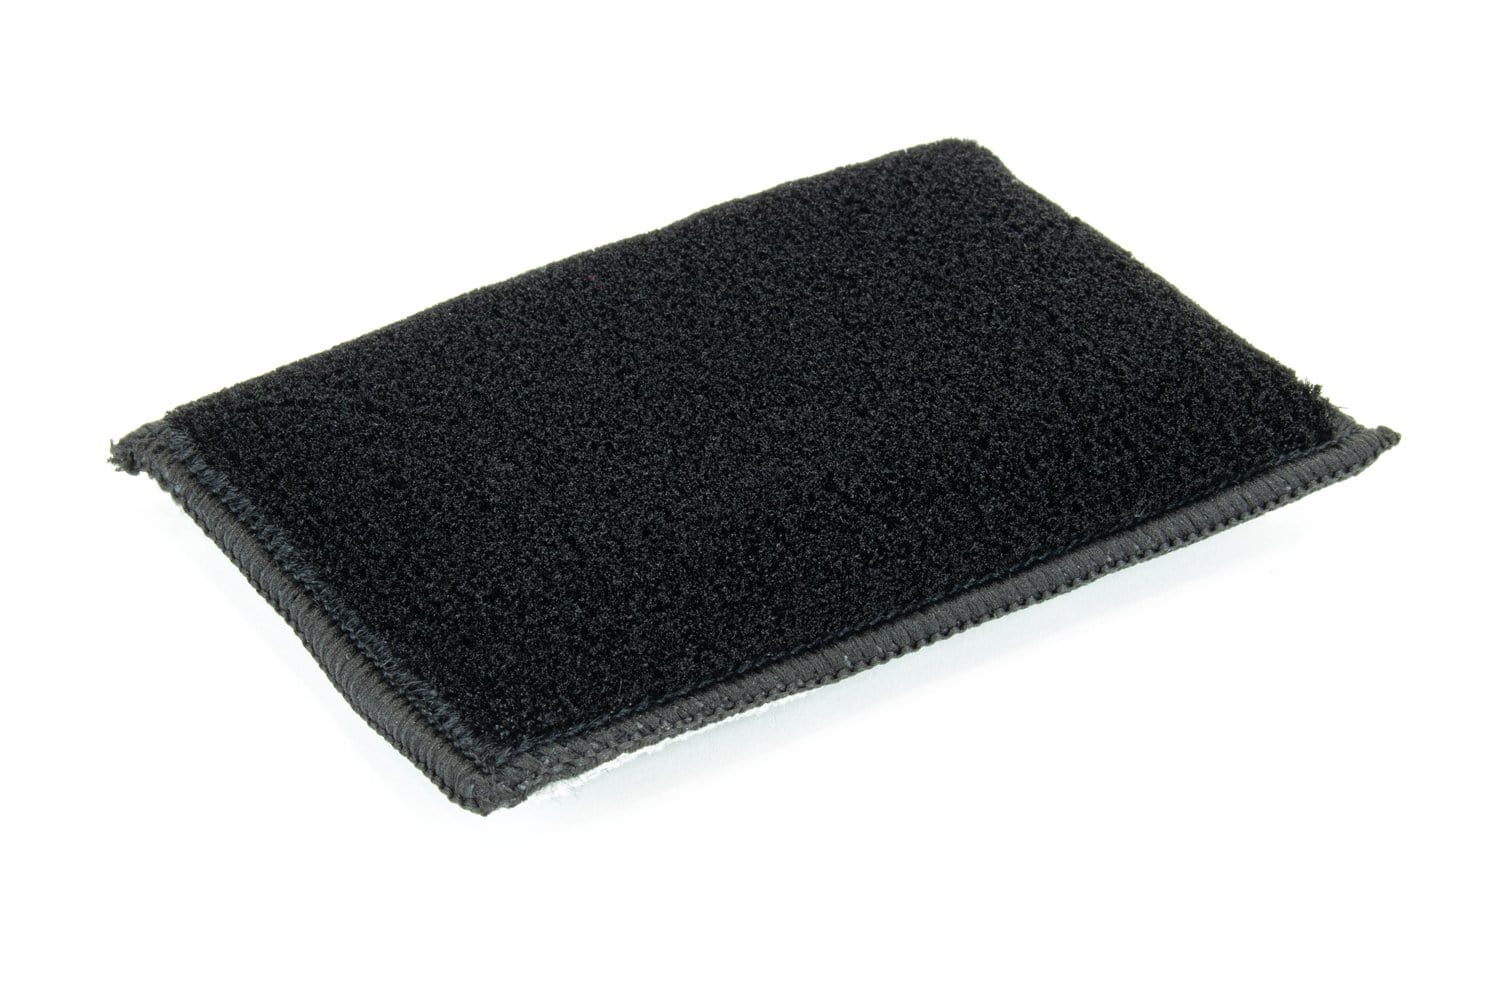 Suds Lab DS Microfiber Detailing Scrub Pad 3 Pack - Car Interior Cleaning & Detailing Microfiber Scrub Pads - Set of 3 - Safe on Leather, Vinyl